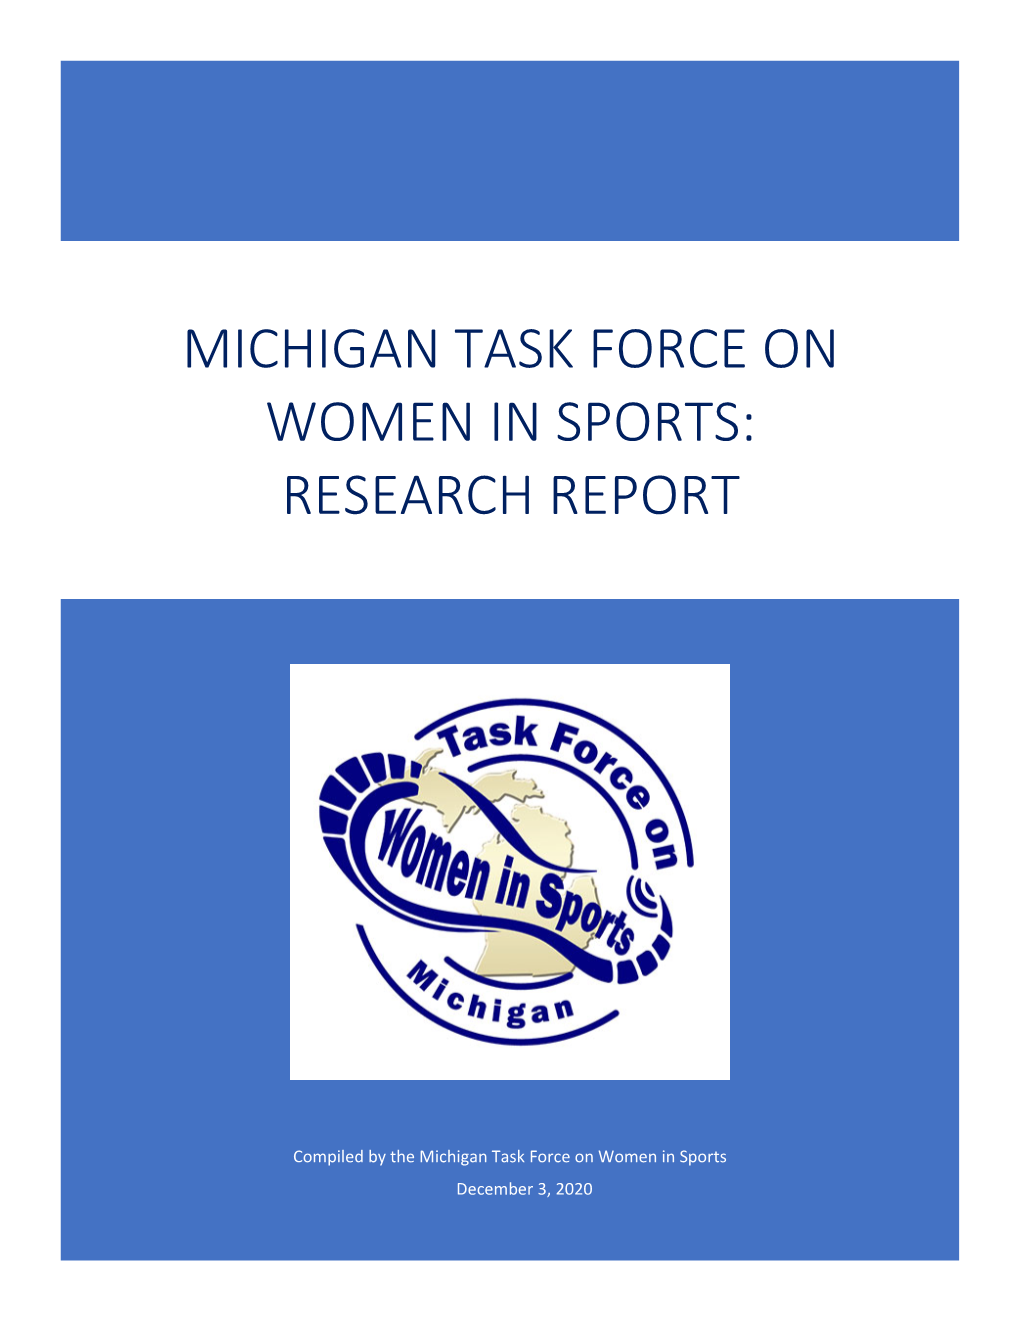 Task Force on Women in Sports Report